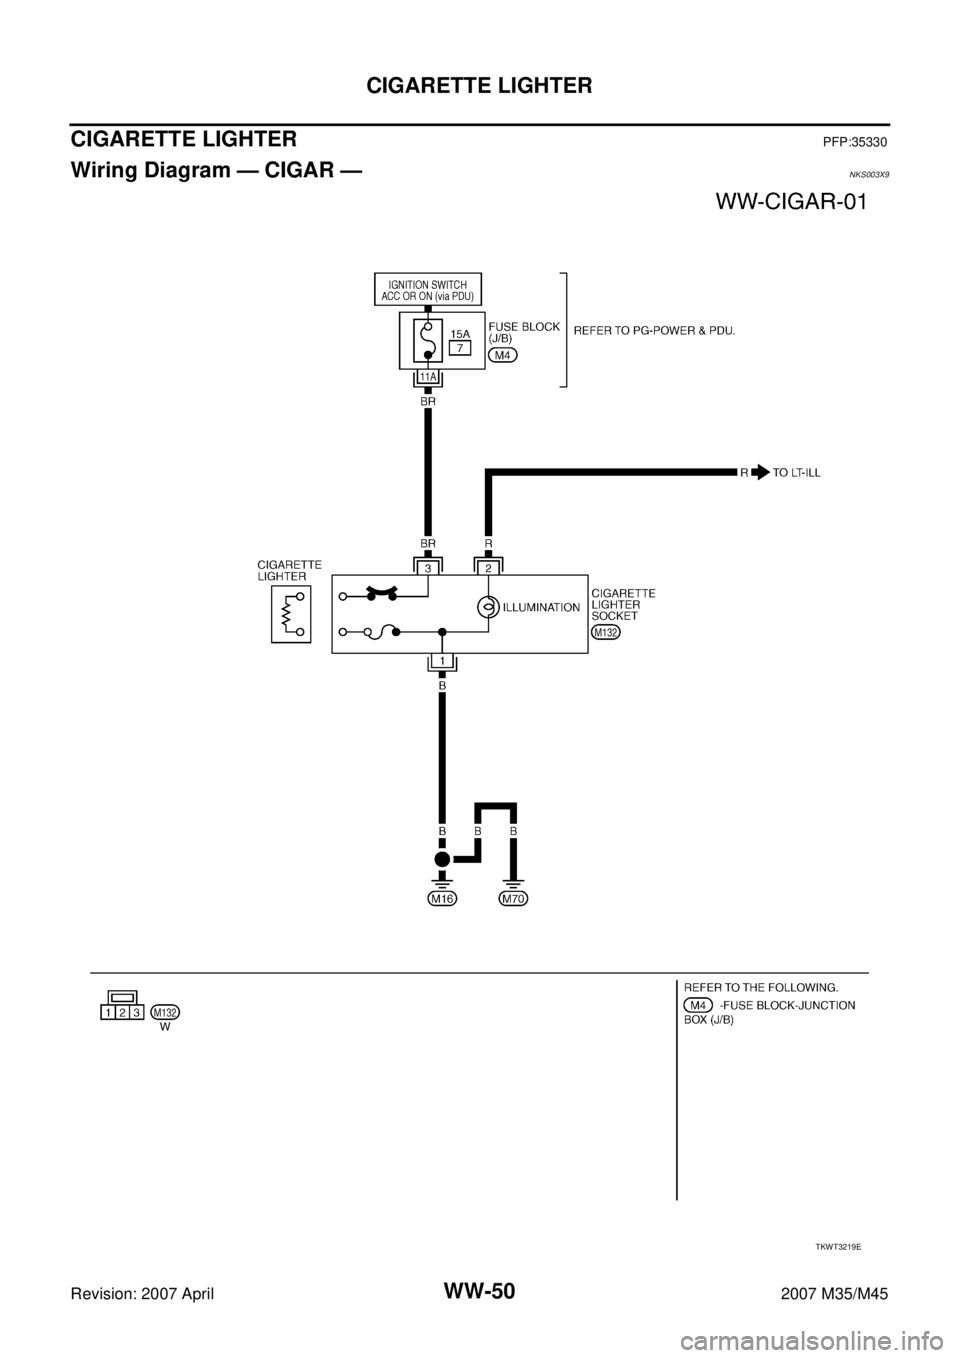 INFINITI M35 2007  Factory Service Manual WW-50
CIGARETTE LIGHTER
Revision: 2007 April2007 M35/M45
CIGARETTE LIGHTERPFP:35330
Wiring Diagram — CIGAR —NKS003X9
TKWT3219E 